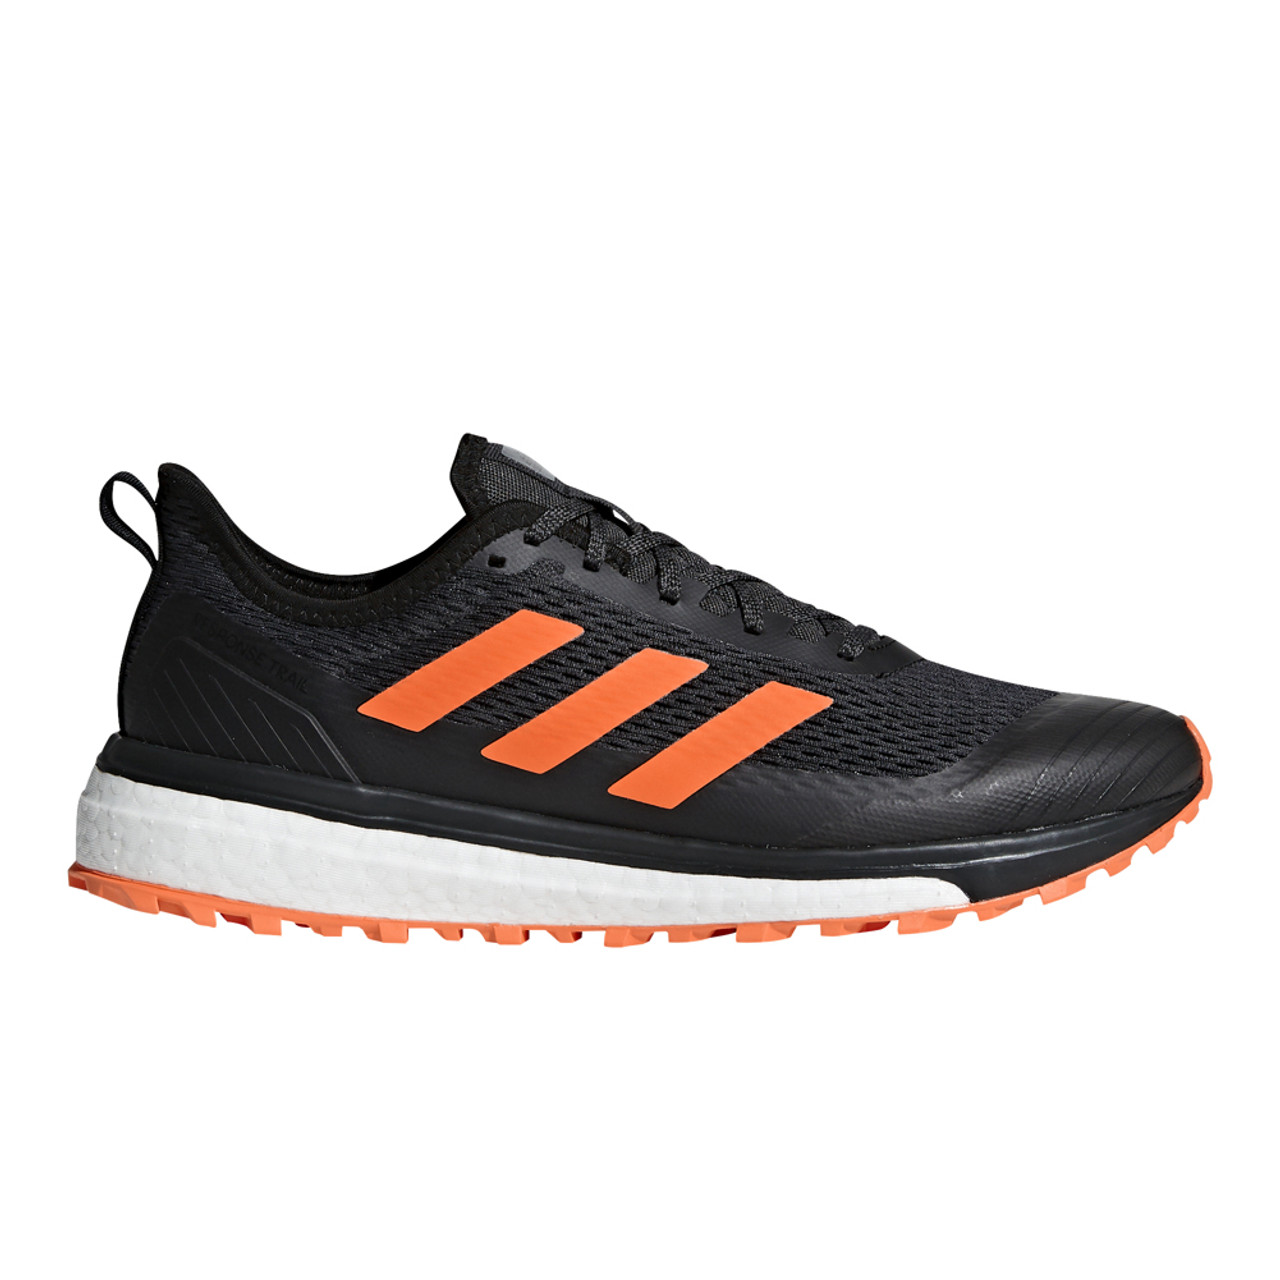 Adidas Men's Response Trail Running Shoe - Black | Discount Adidas Men's  Athletic Shoes & More - Shoolu.com | Shoolu.com